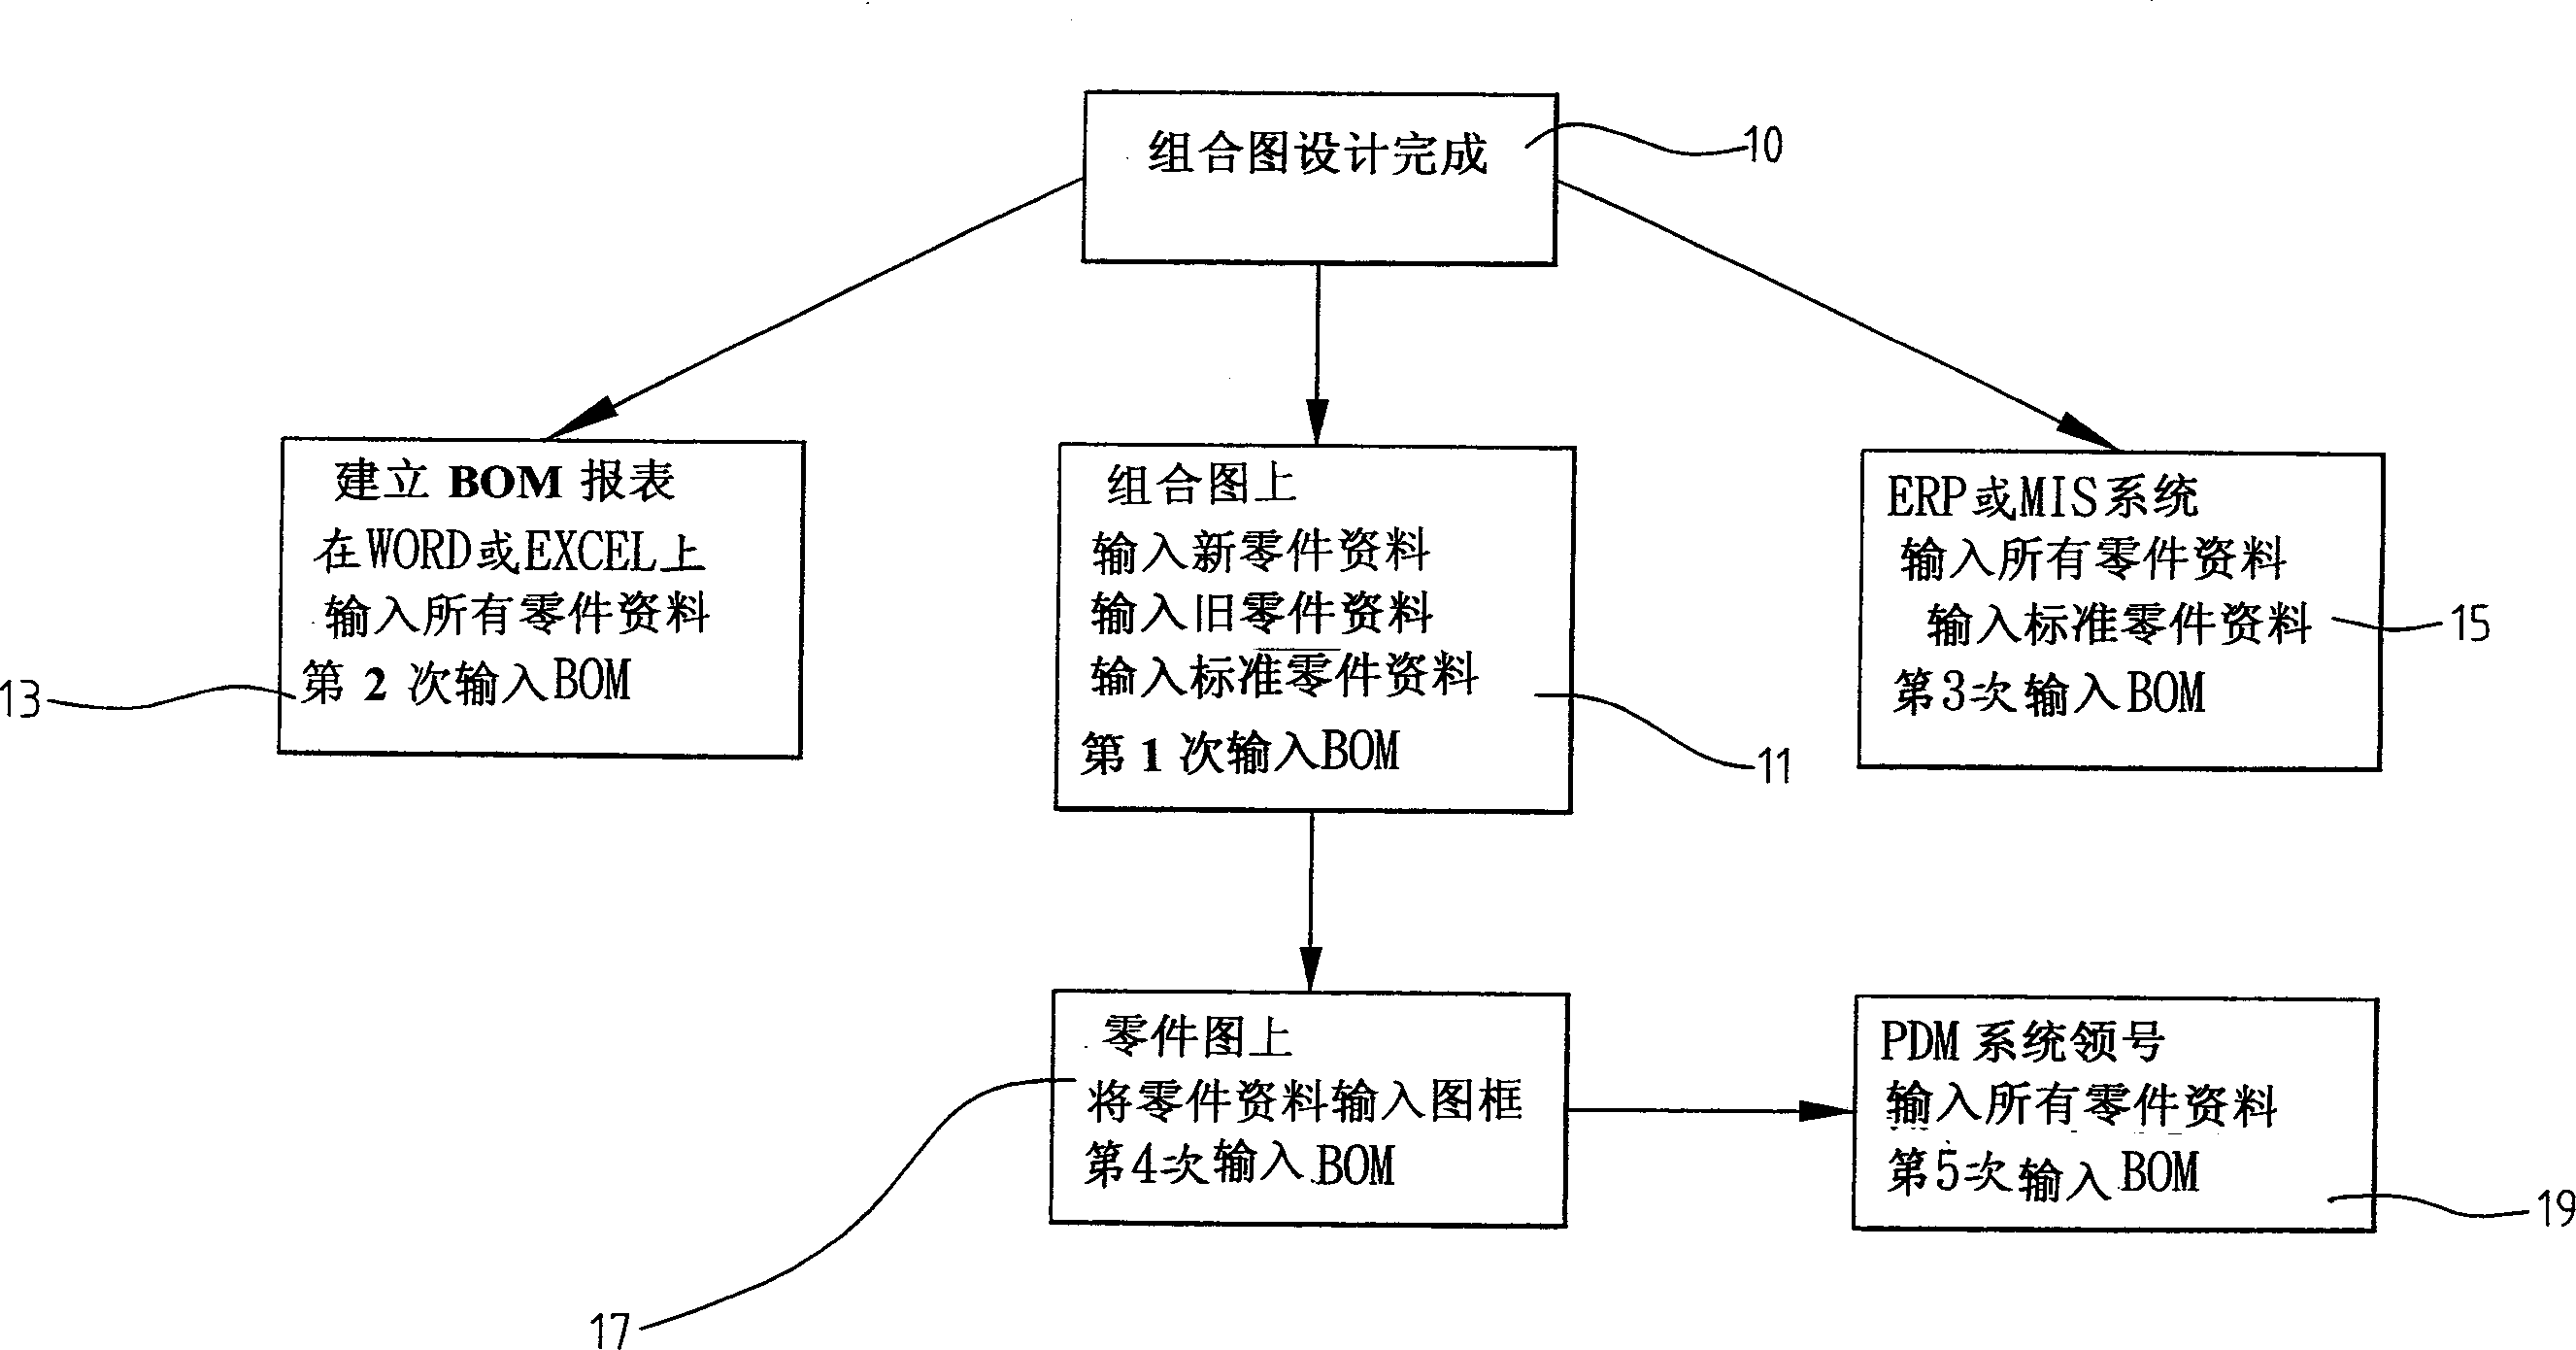 Material list conforming method via computer software